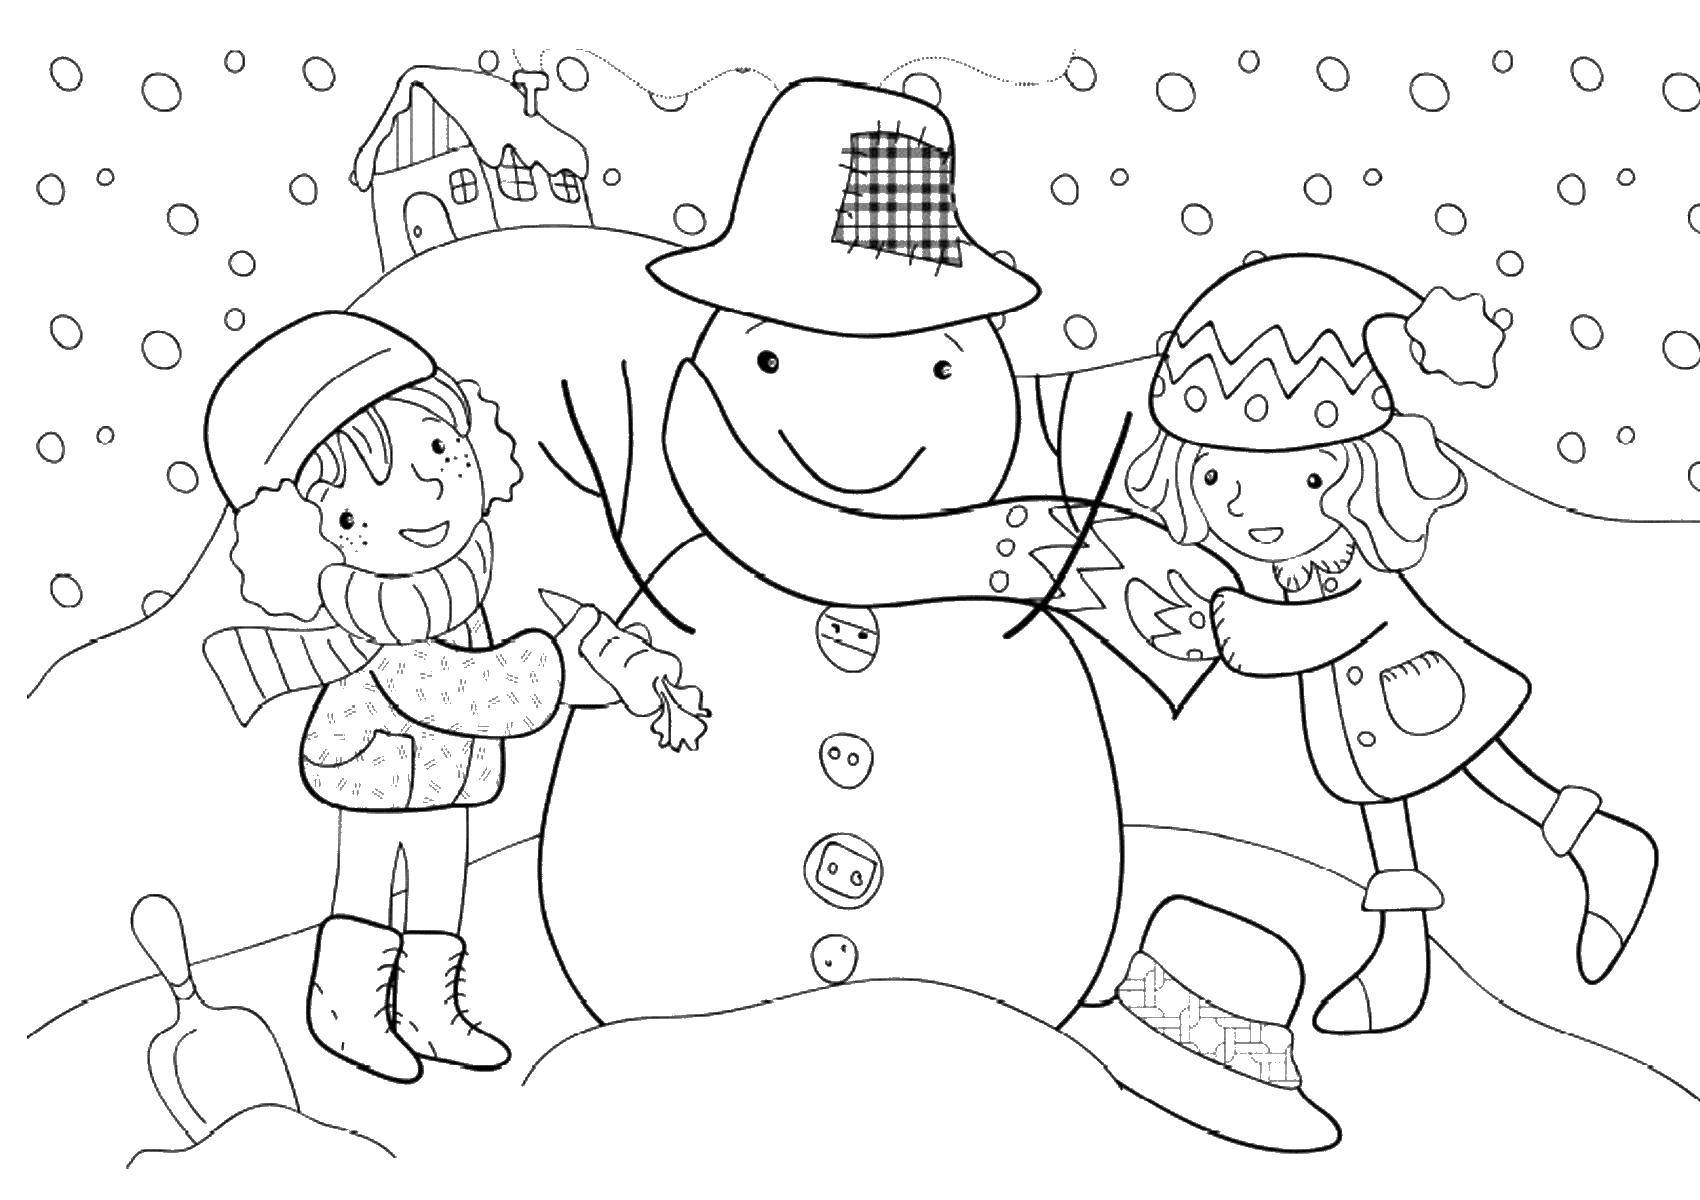 Название: Раскраска Дети лепят снеговика. Категория: Люди. Теги: снеговик, дети.